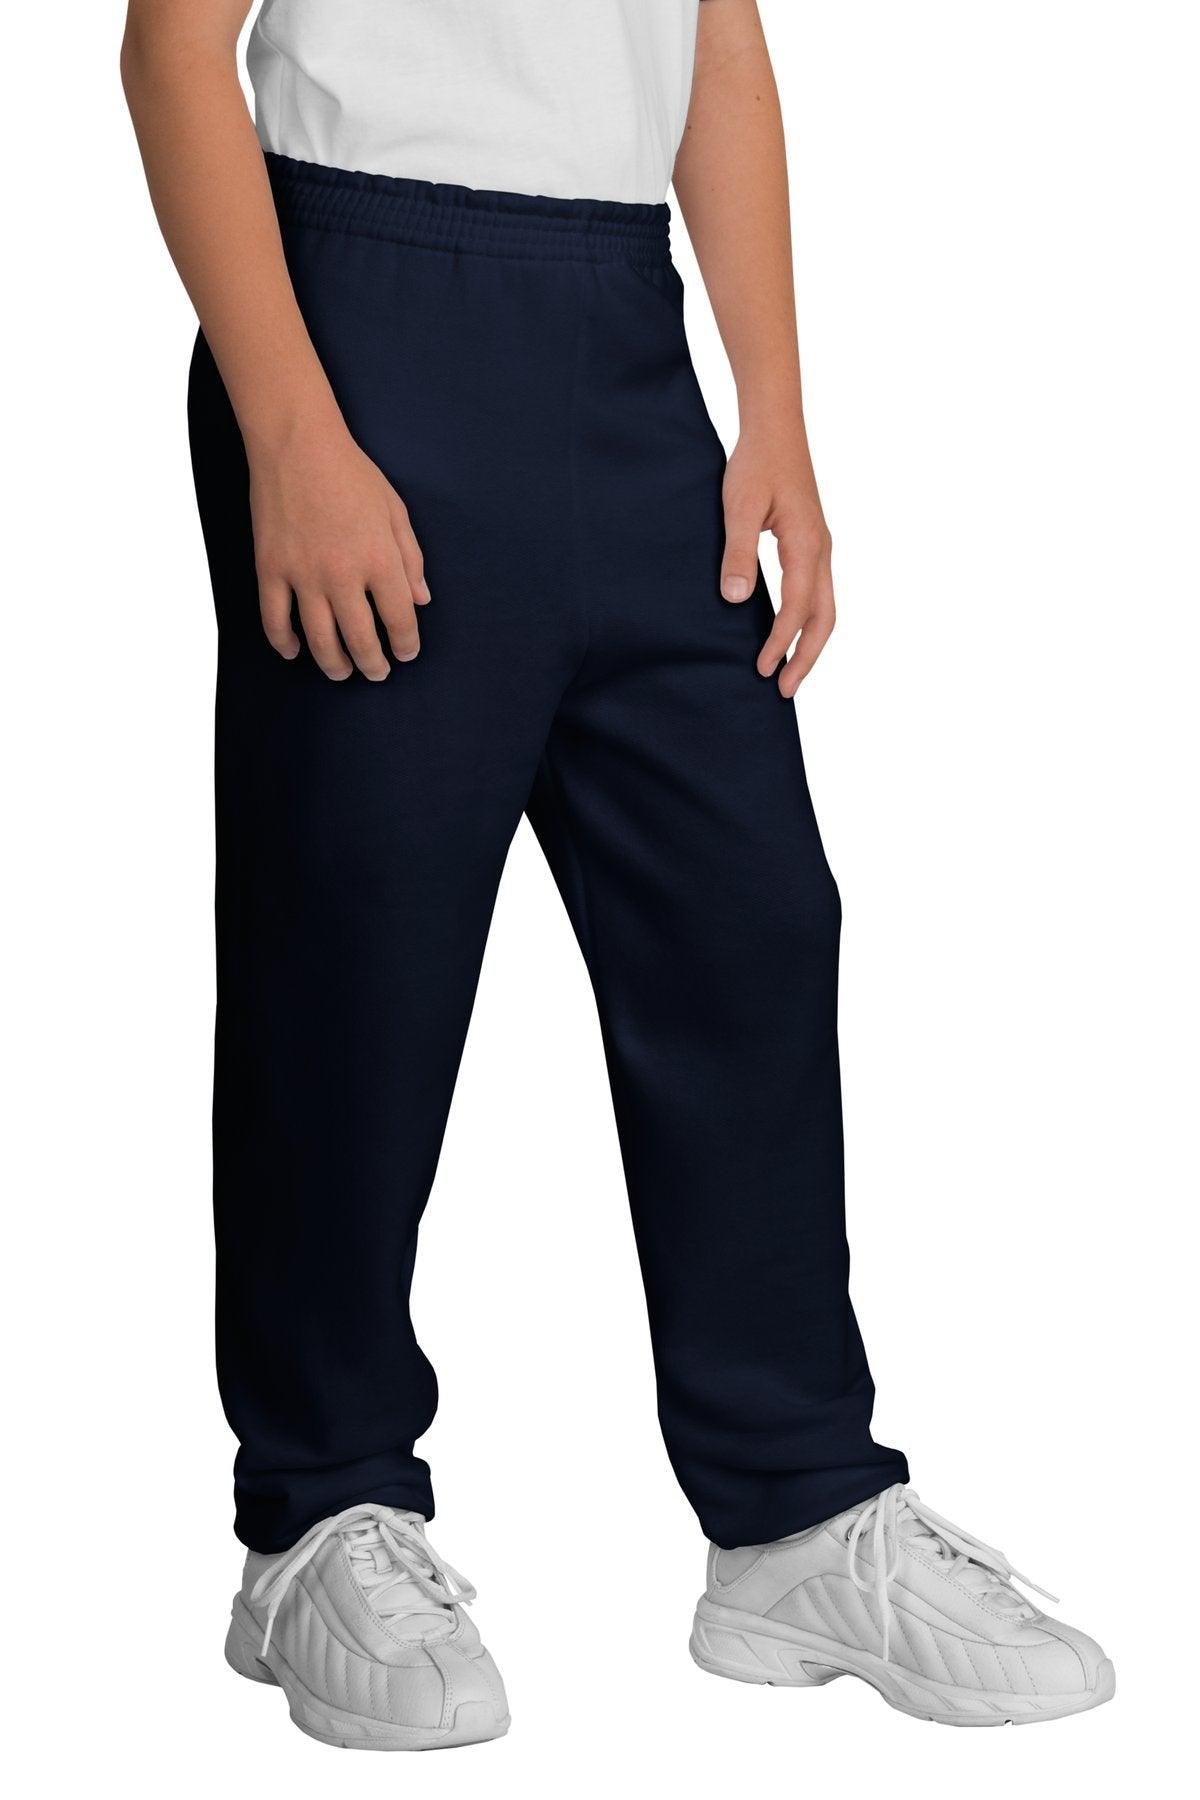 Port & Company - Youth Core Fleece Sweatpant. PC90YP - Dresses Max